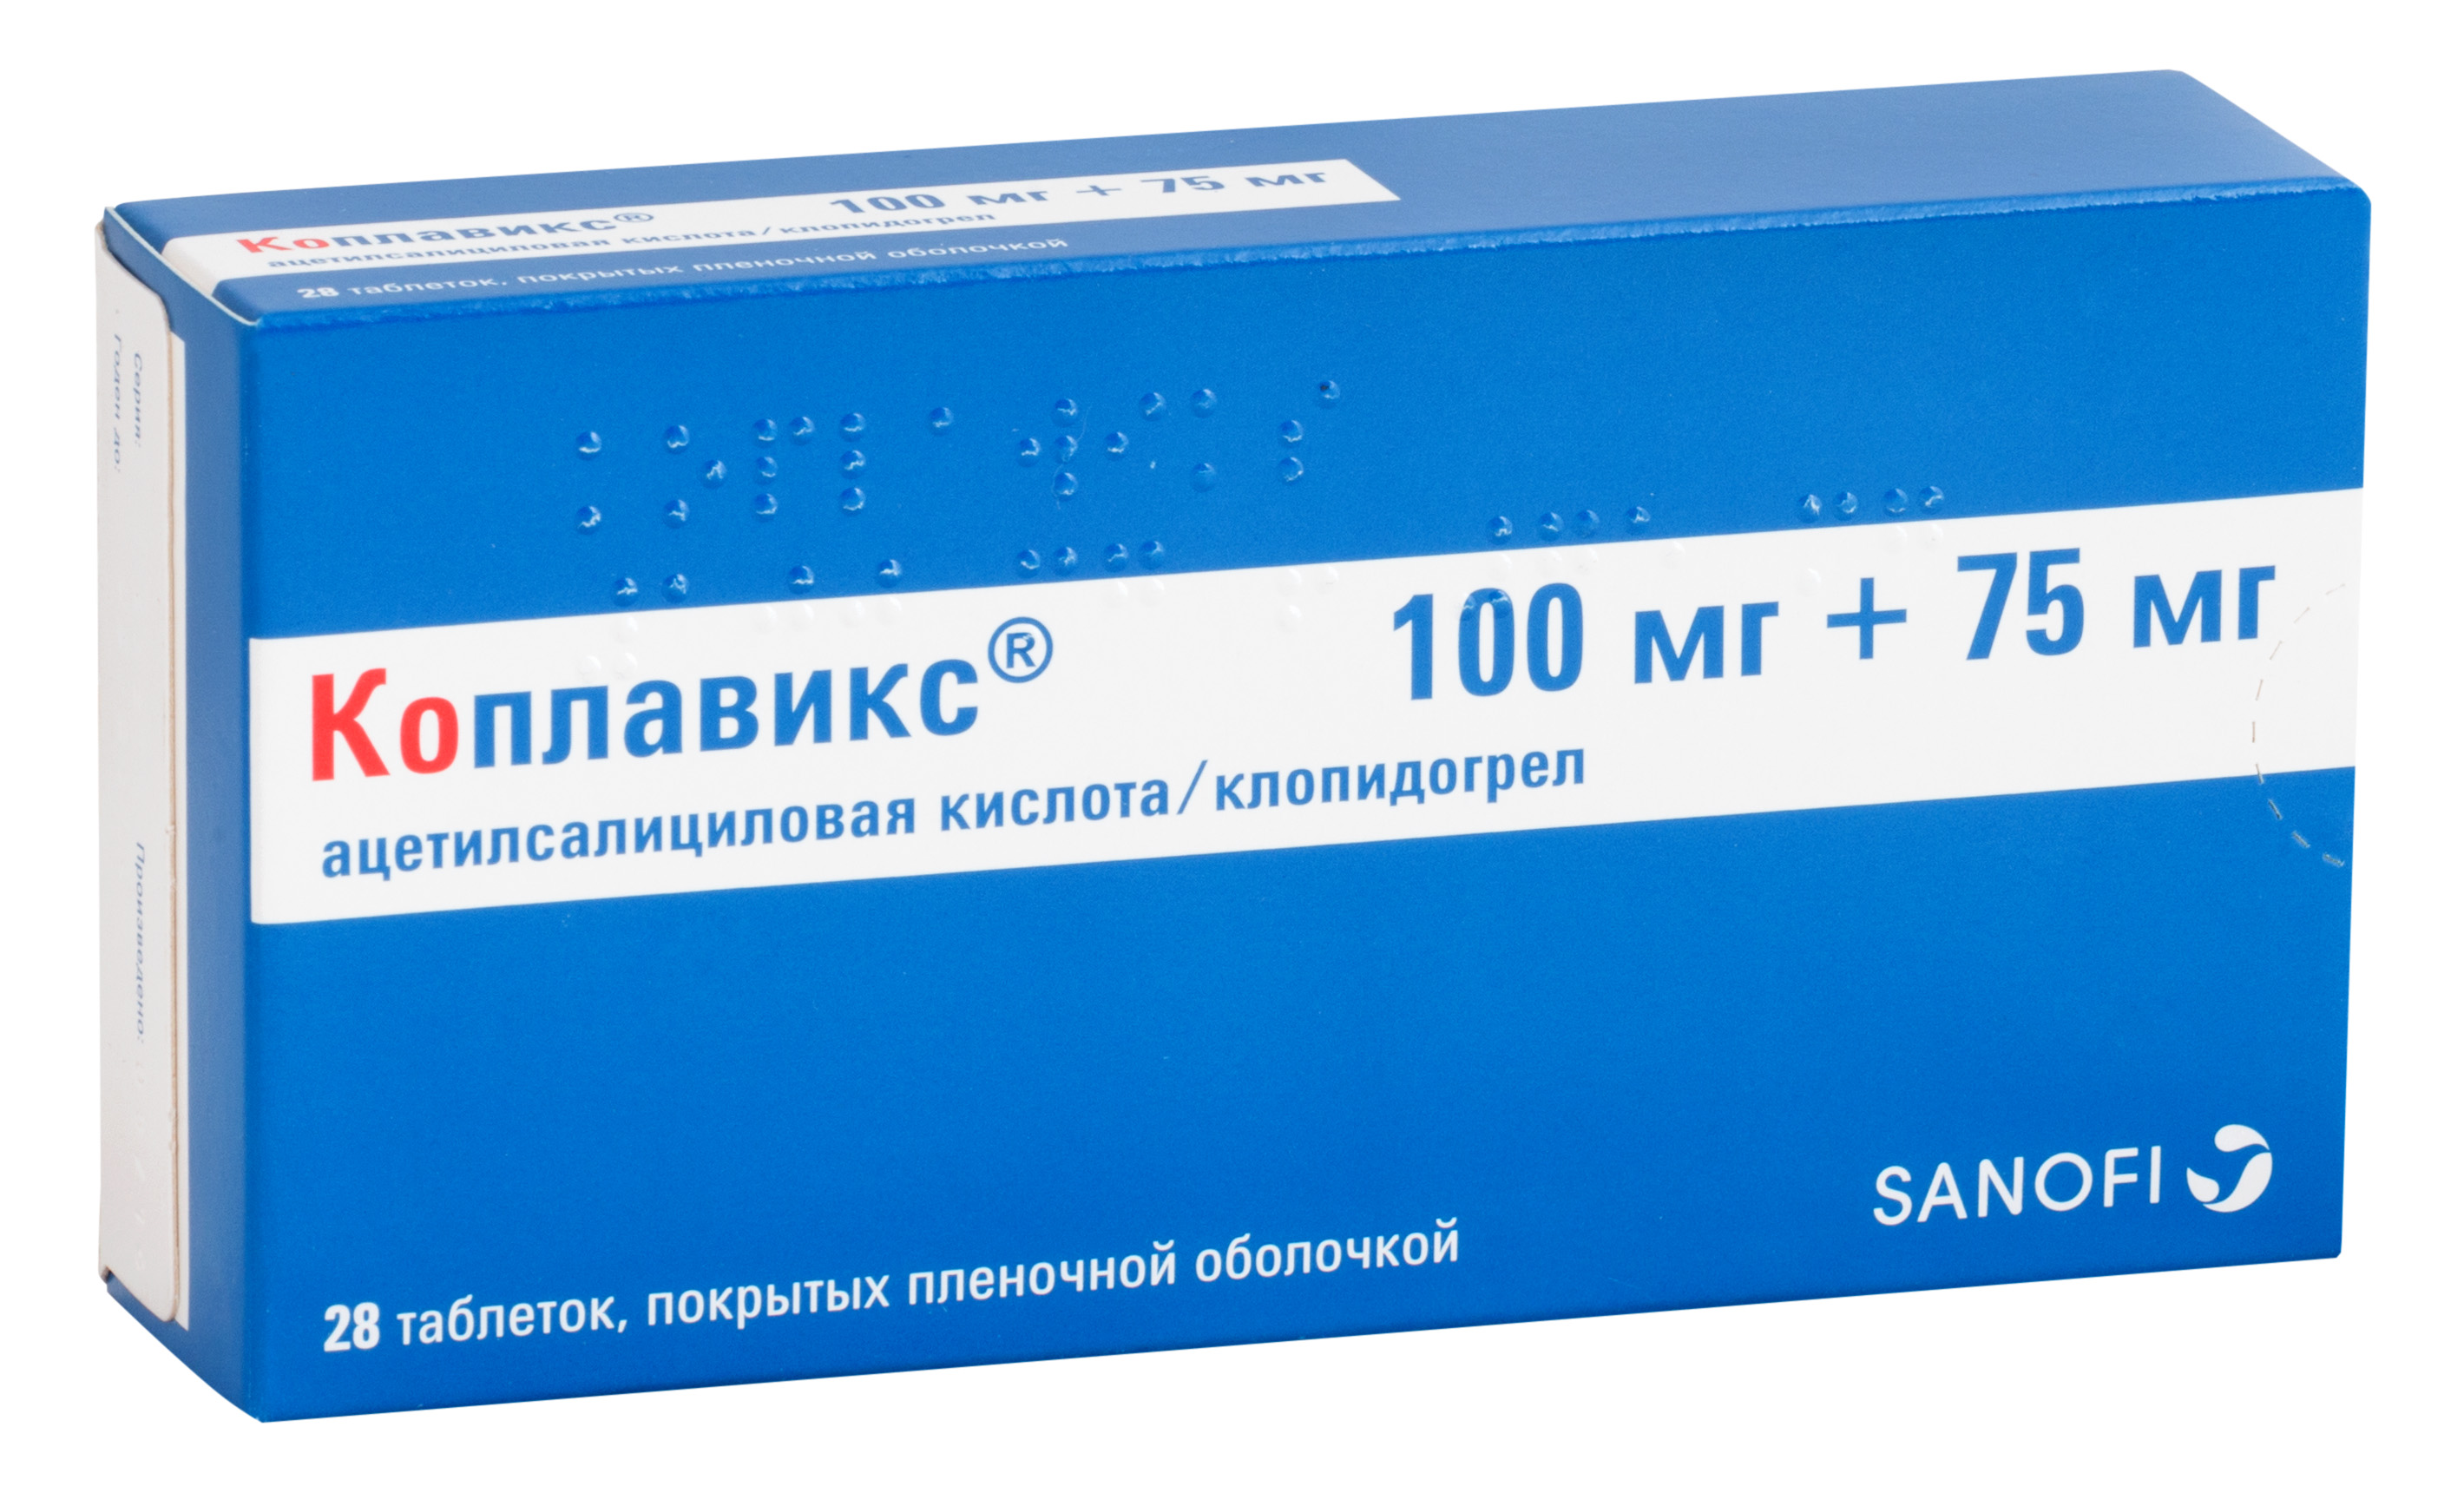 Aptekirls :: Коплавикс табл. п.п.о. 100 мг + 75 мг №28 — заказать .